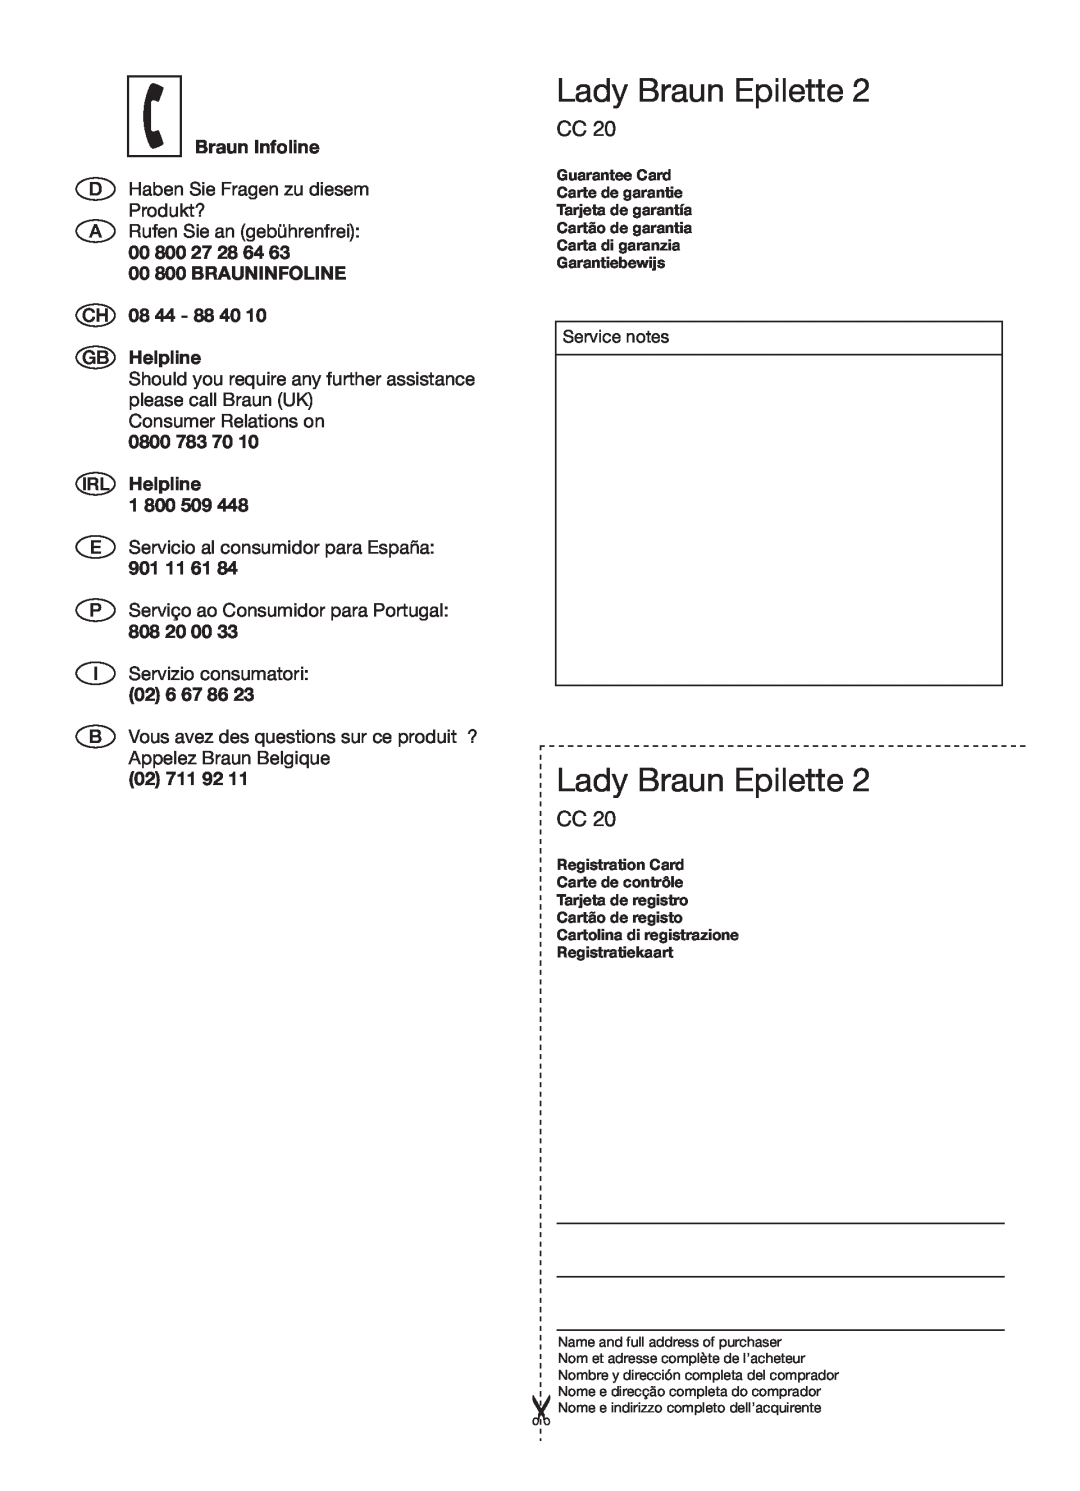 Braun CC20 manual Lady Braun Epilette, Braun Infoline, 00 800 27 28 64 00 800 BRAUNINFOLINE CH 08 44 - 88 40 GB Helpline 